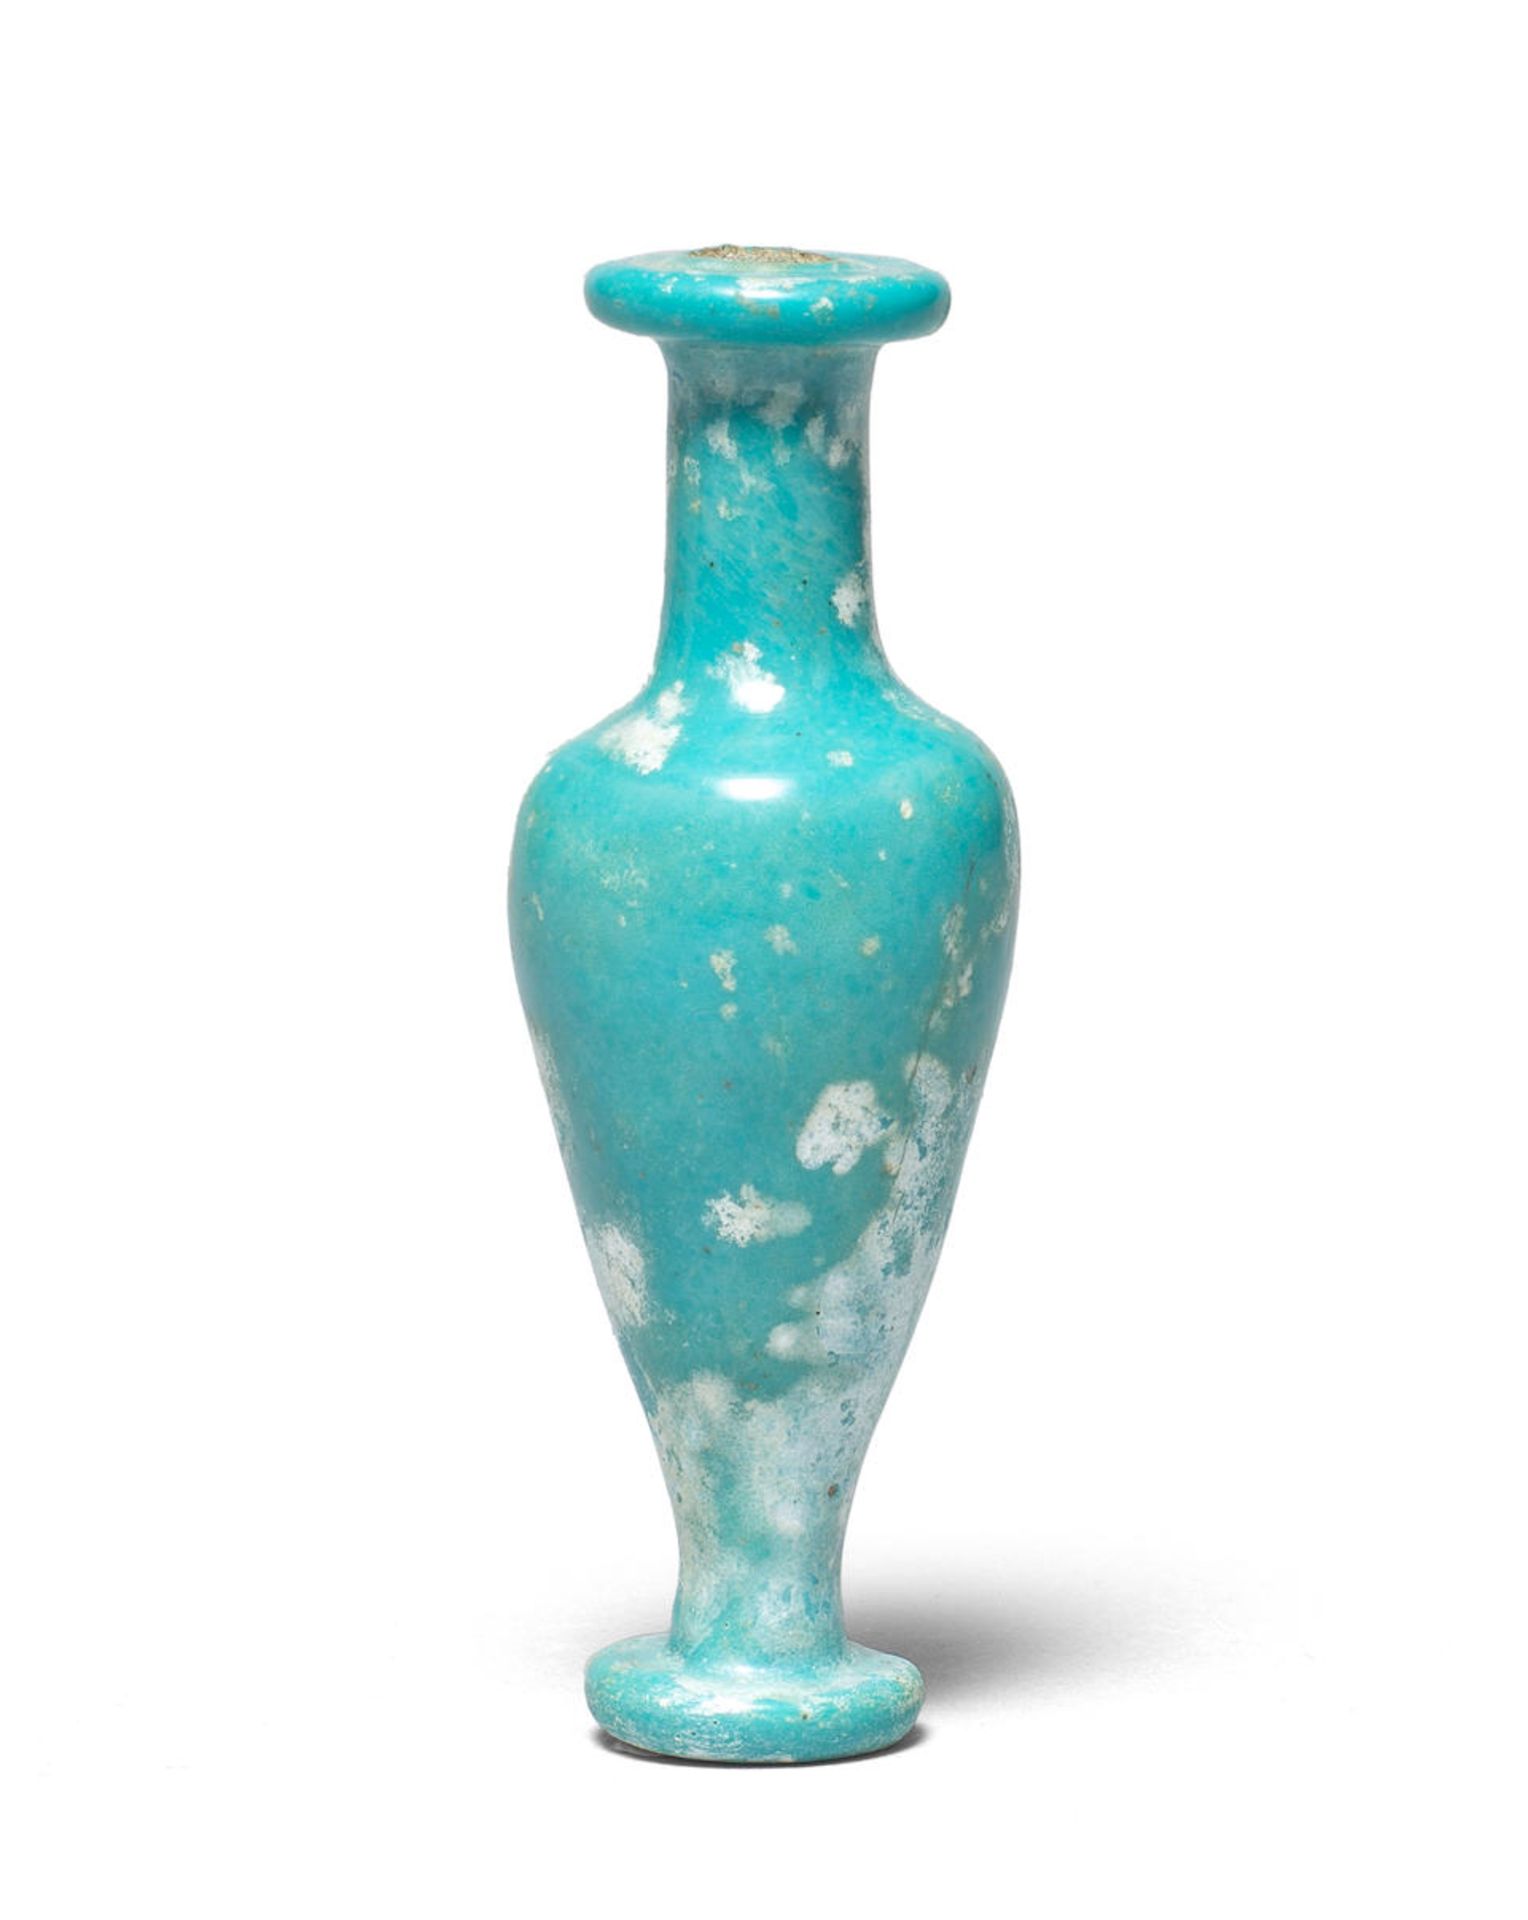 A Hellenistic opaque turquoise glass unguentarium